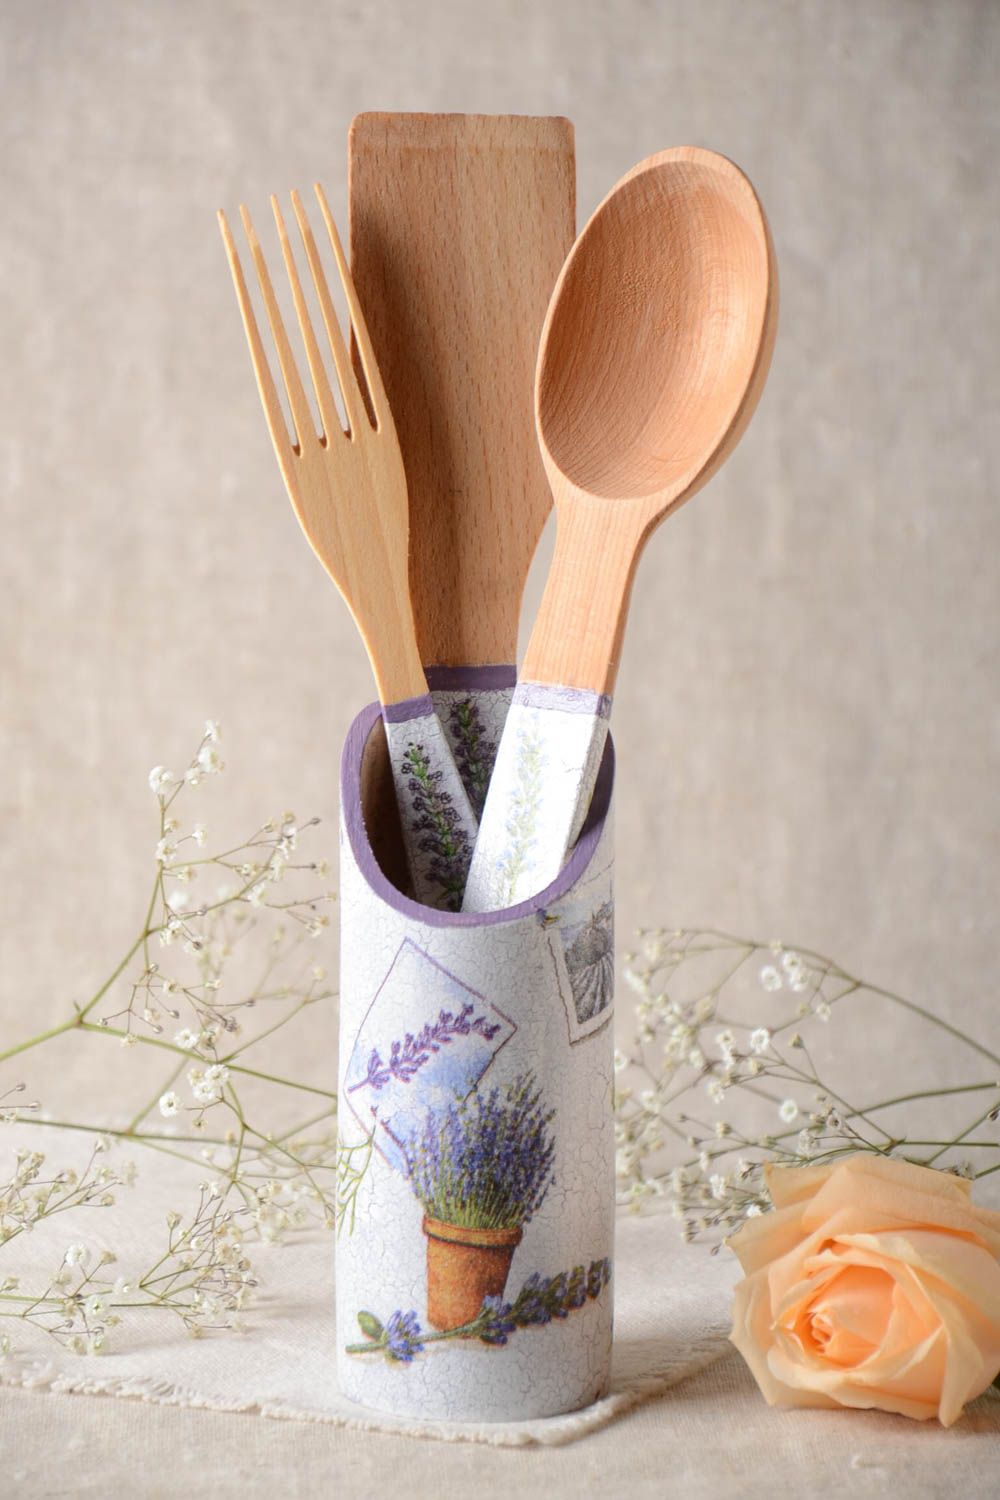 Handmade kitchen utensils set wooden spatula fork spoon decoupage ideas photo 1